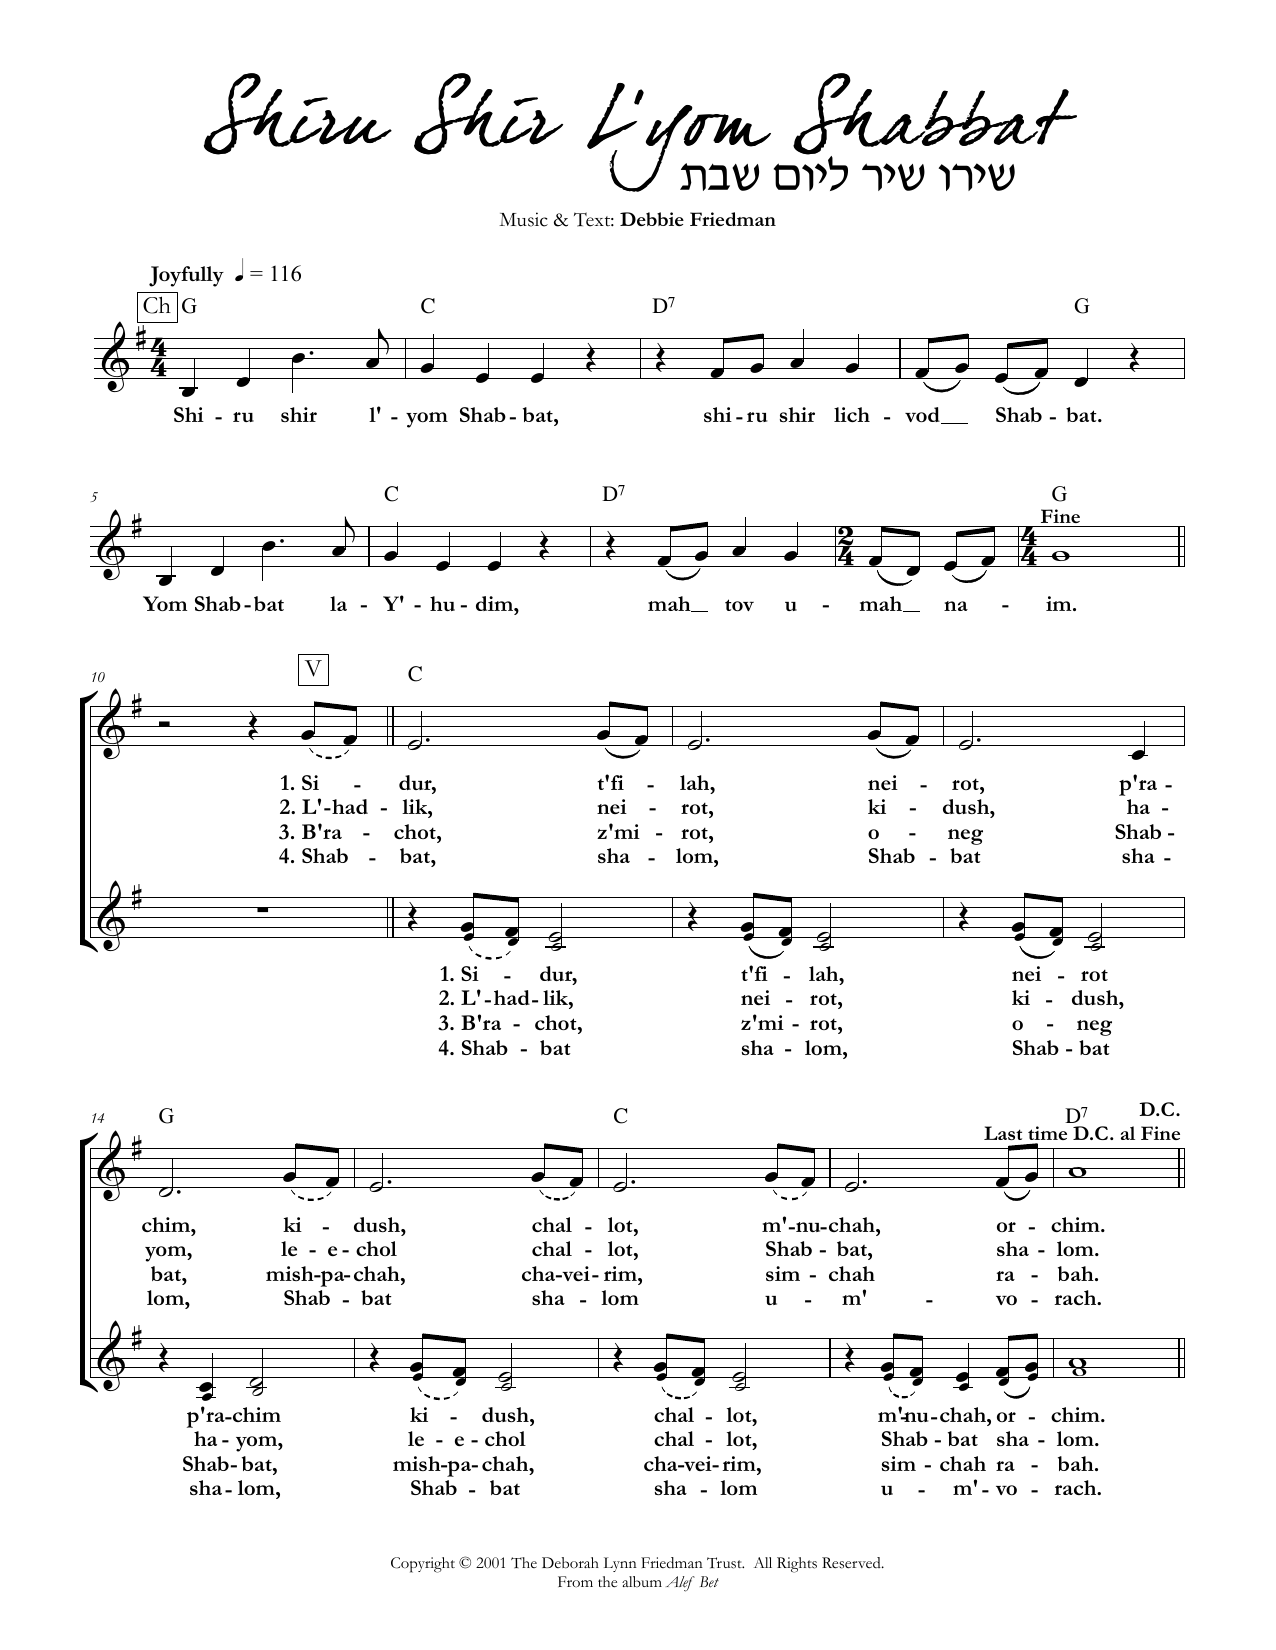 Debbie Friedman Shiru Shir L'yom Shabbat sheet music notes and chords arranged for Lead Sheet / Fake Book